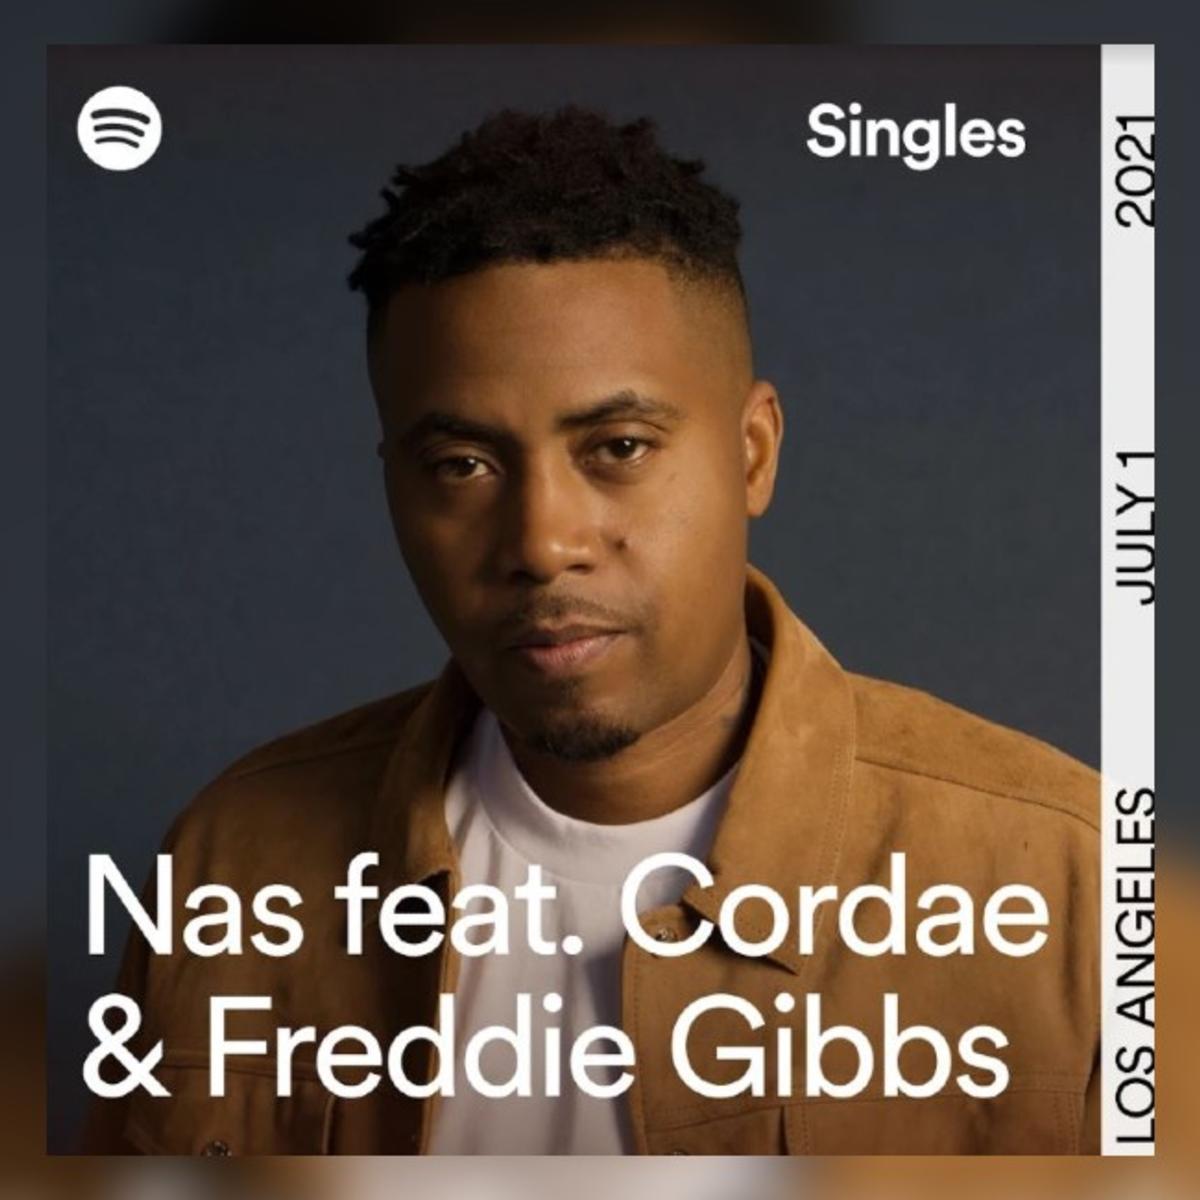 Nas Life Is Like A Dice Game ft. Freddie Gibbs Cordae